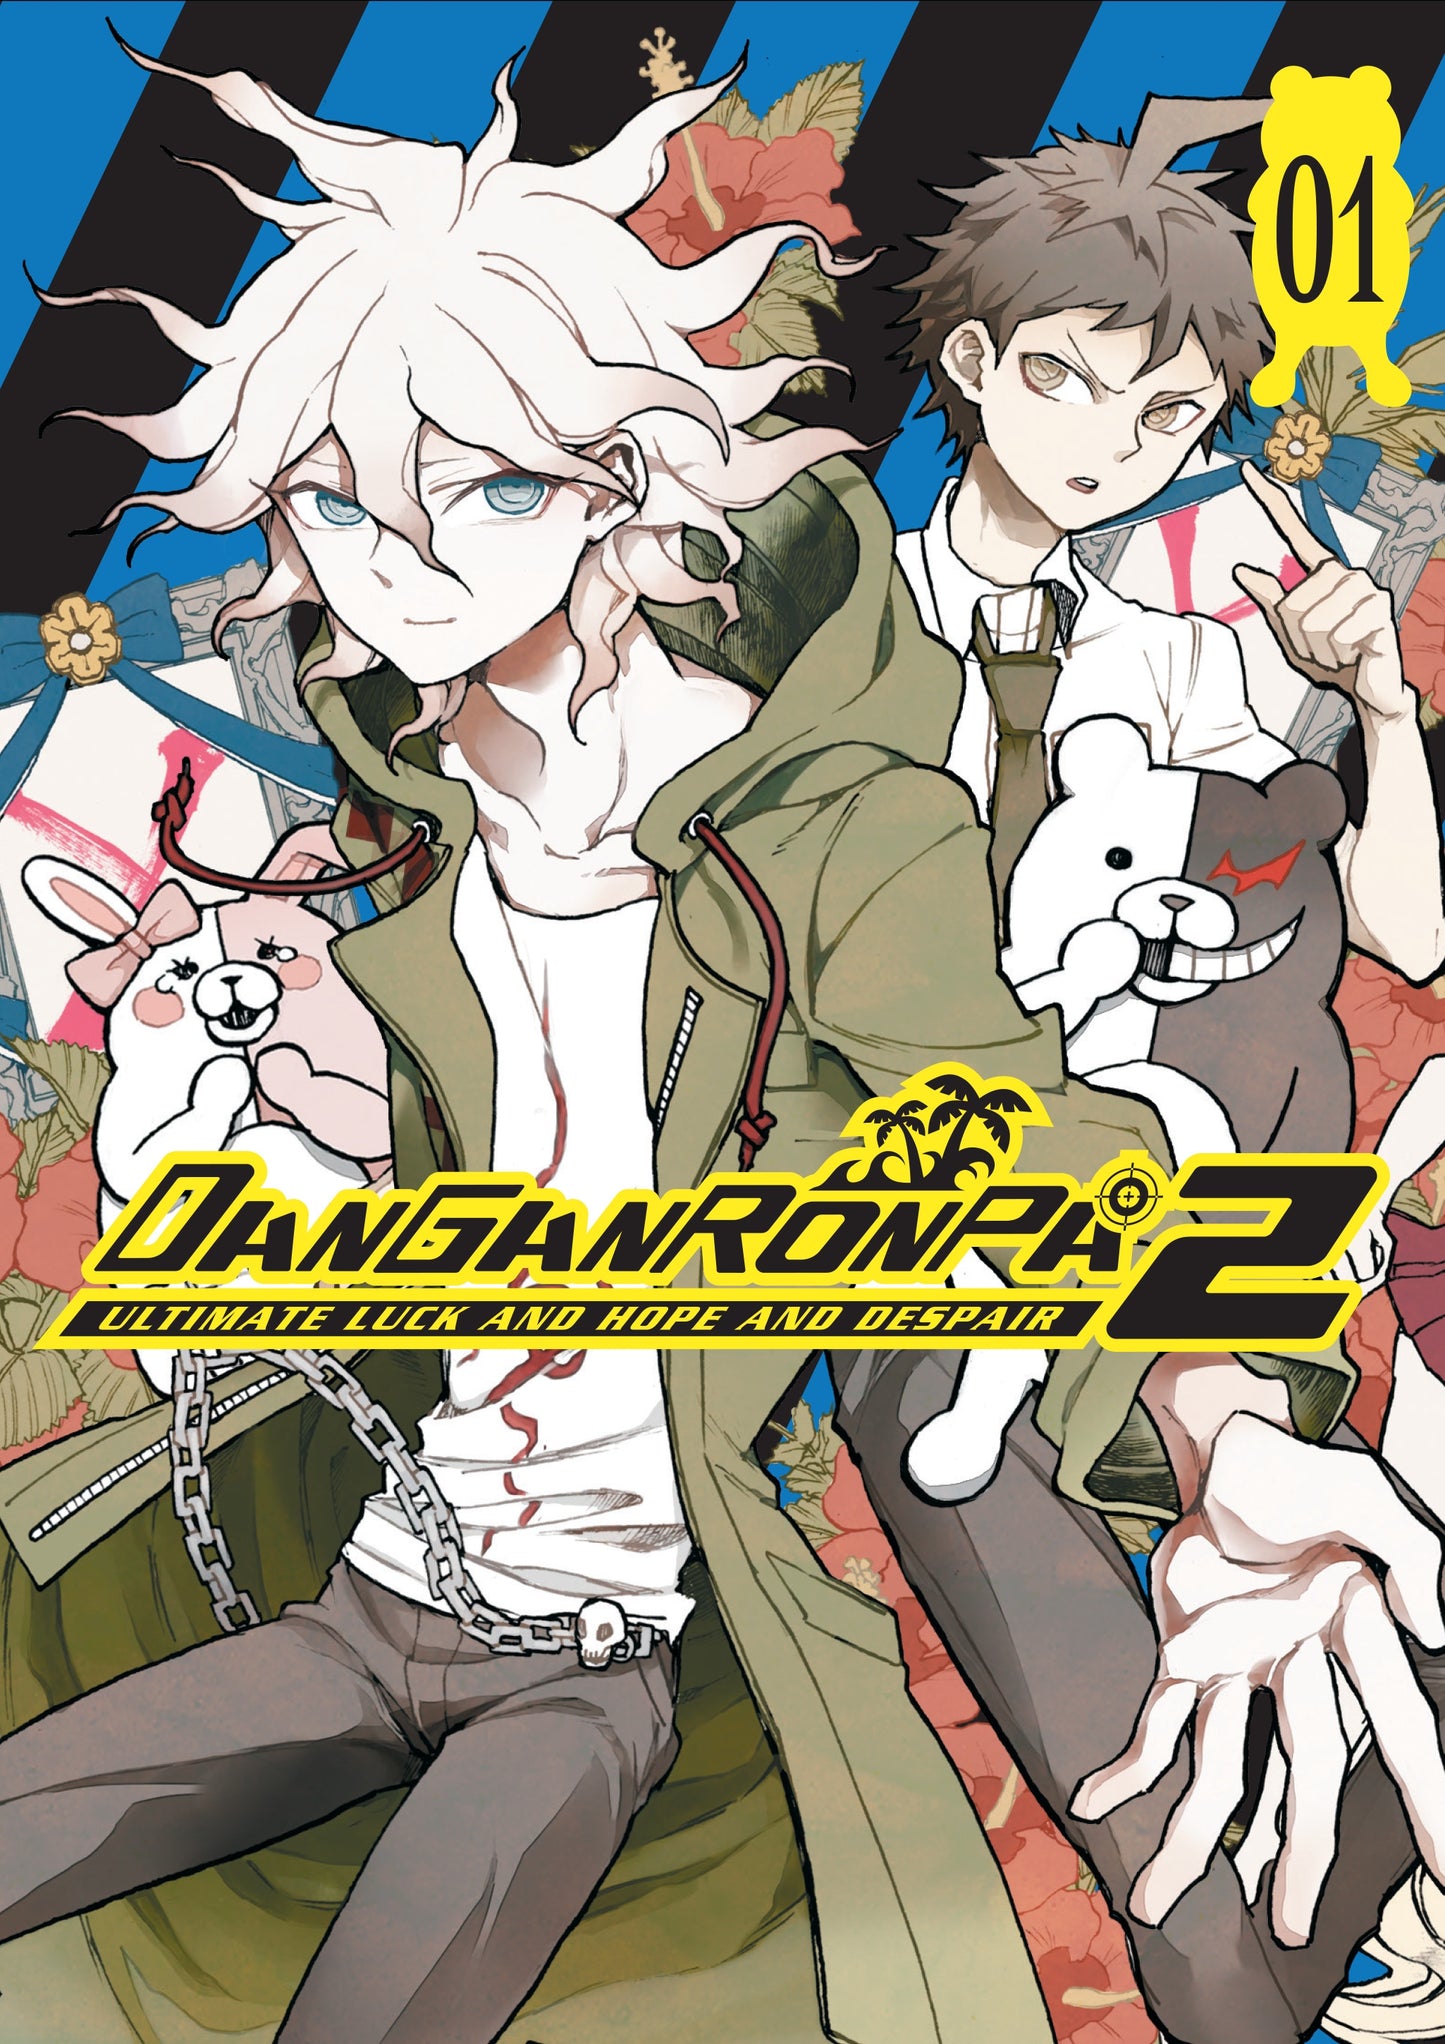 Danganronpa 2 Ultimate Luck And Hope And Despair Volume 1 - Manga Warehouse